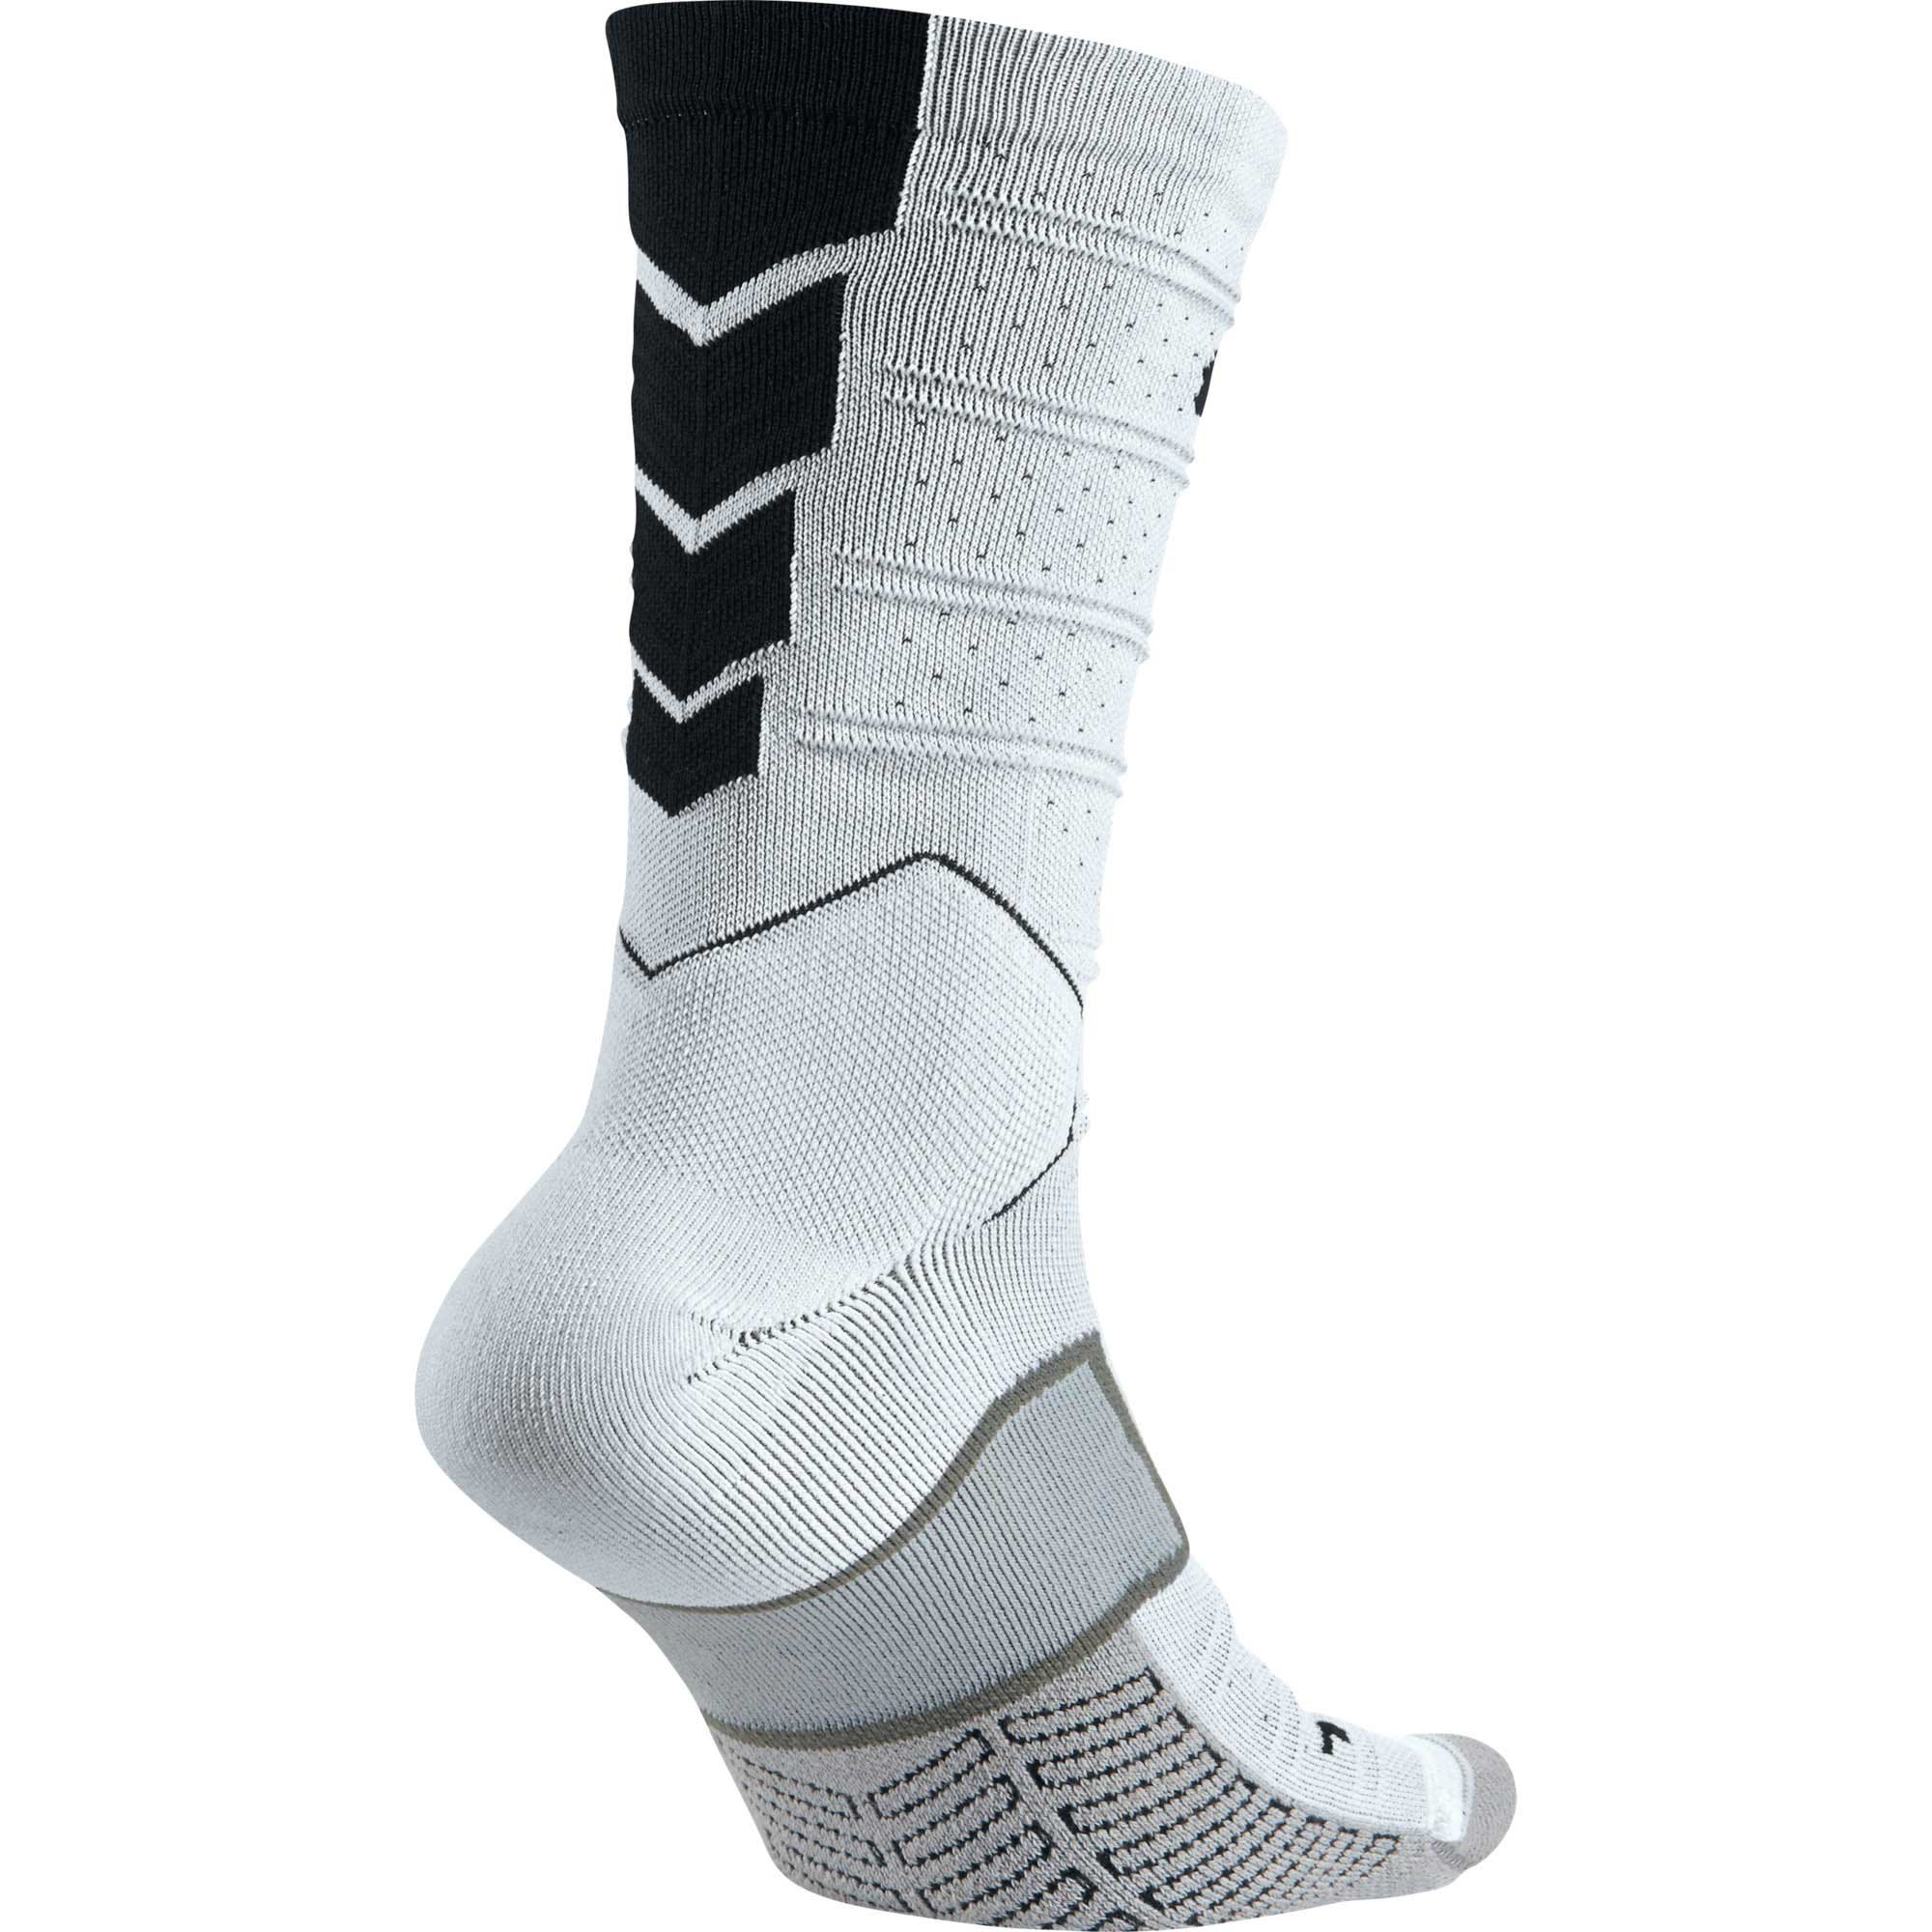 Nike Matchfit Mercurial Elite Crew Socks - White/Black -